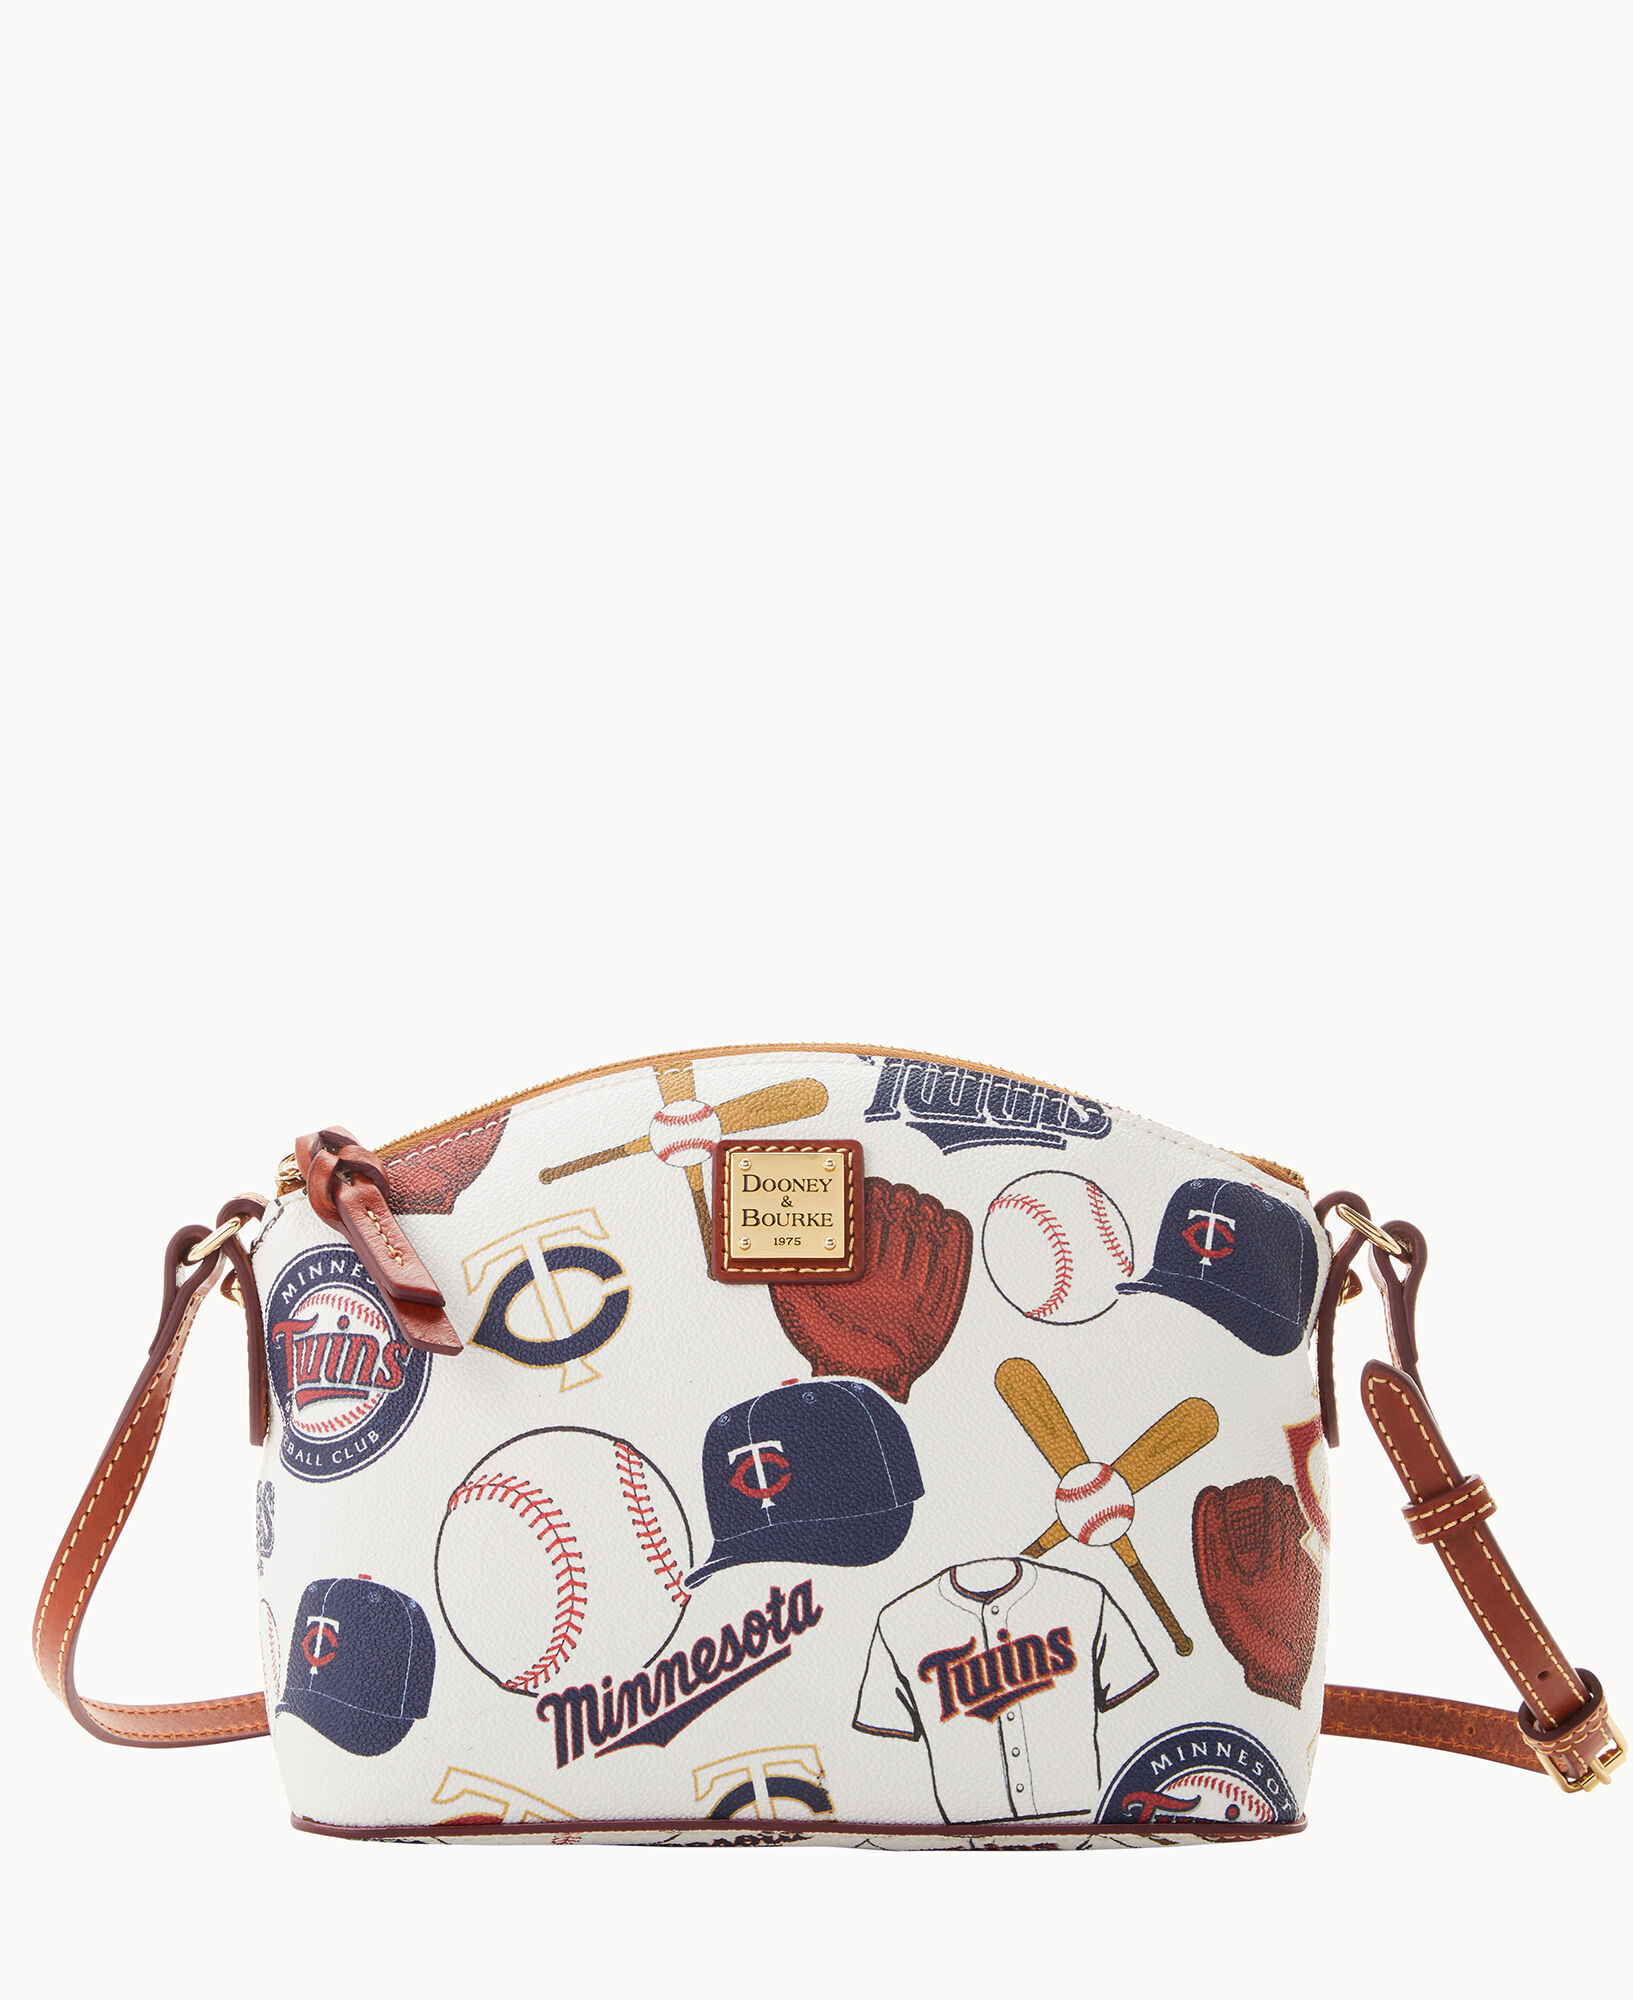 Dooney and Bourke MLB Twins Handbag